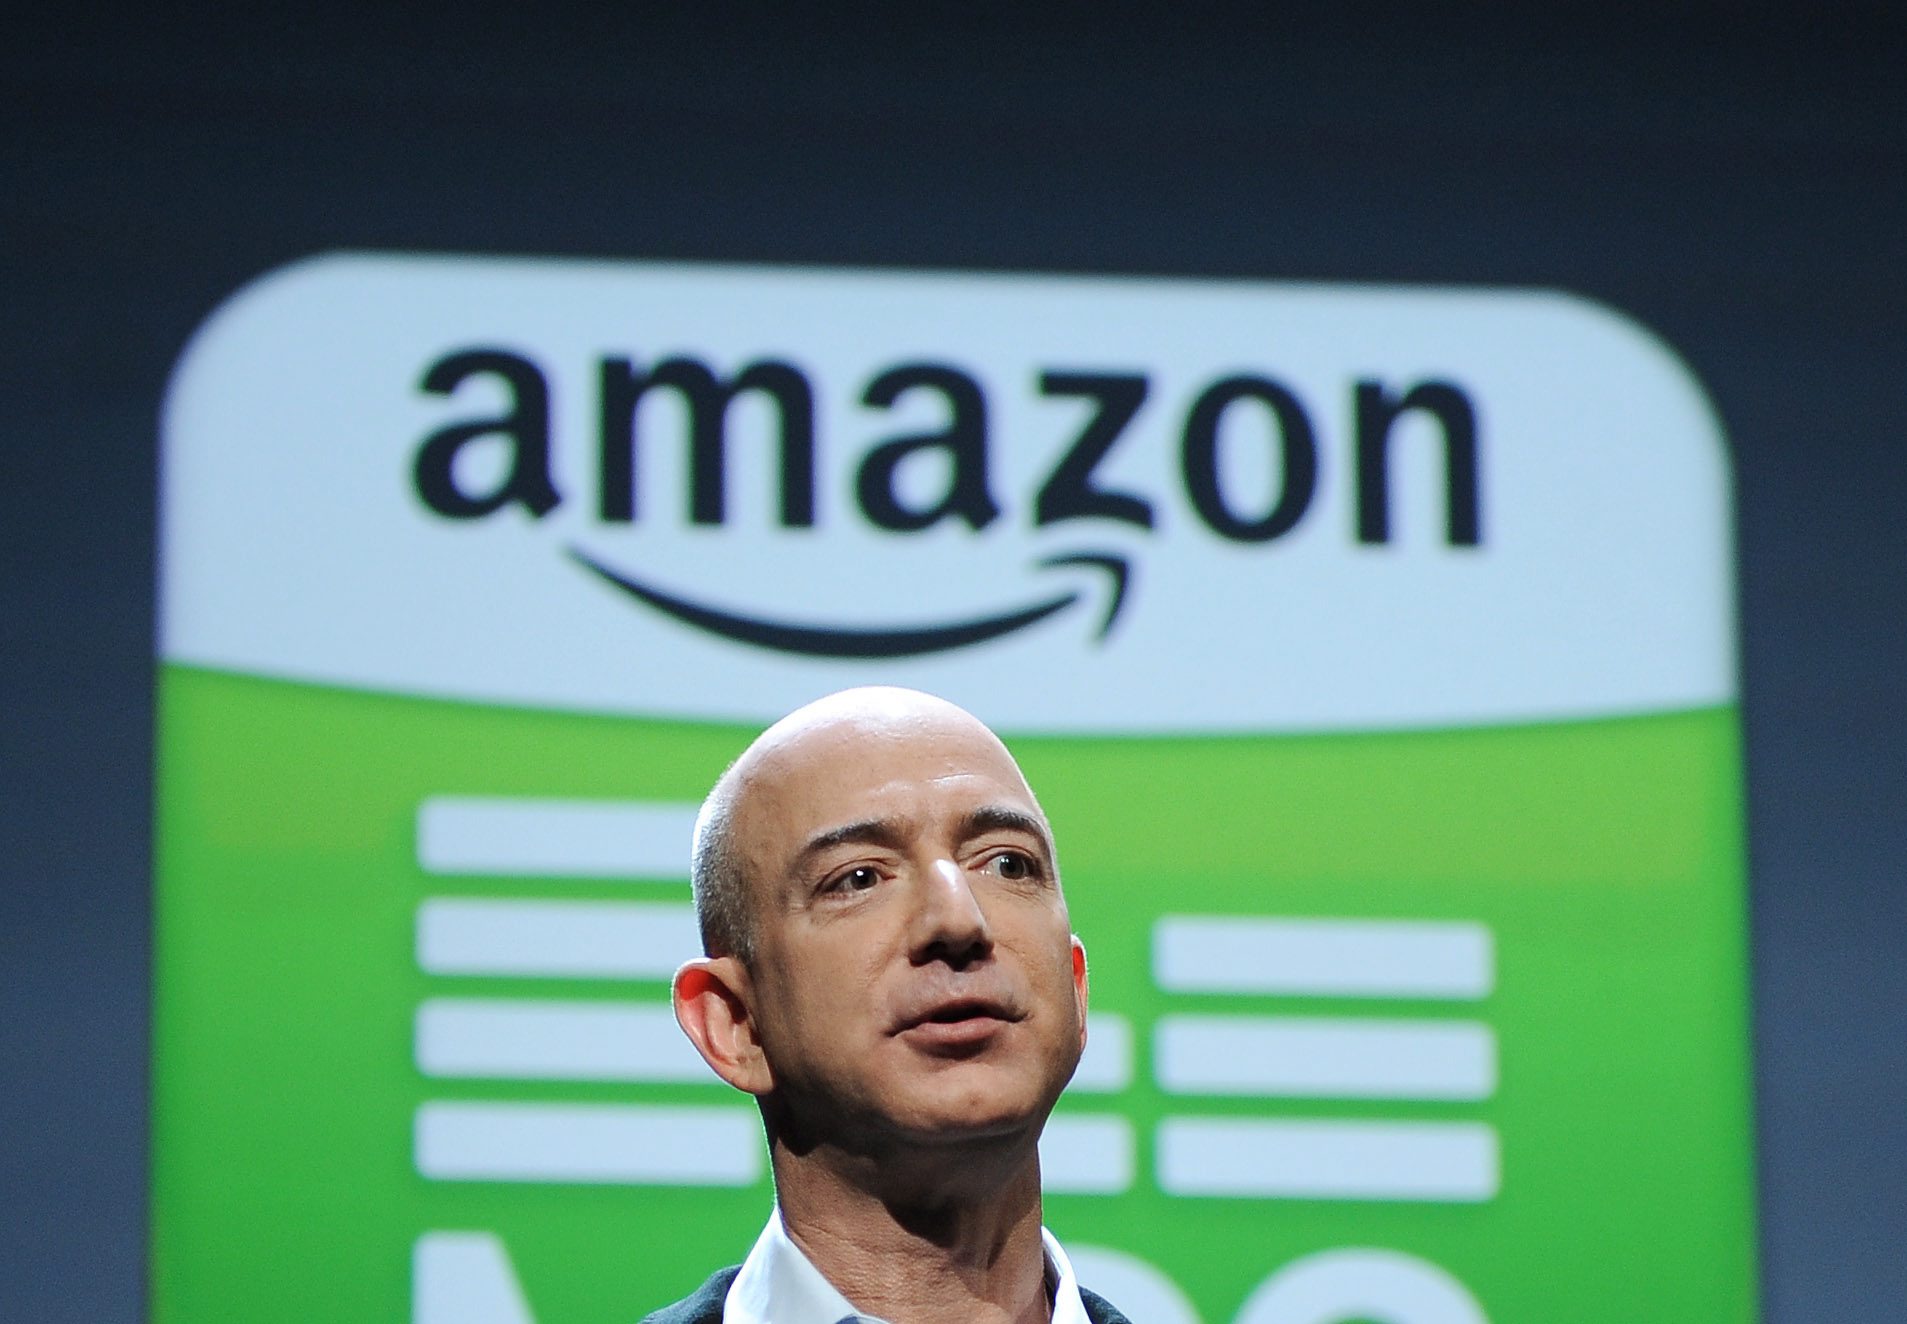 ”Облакът” на Amazon - пред Google и Microsoft